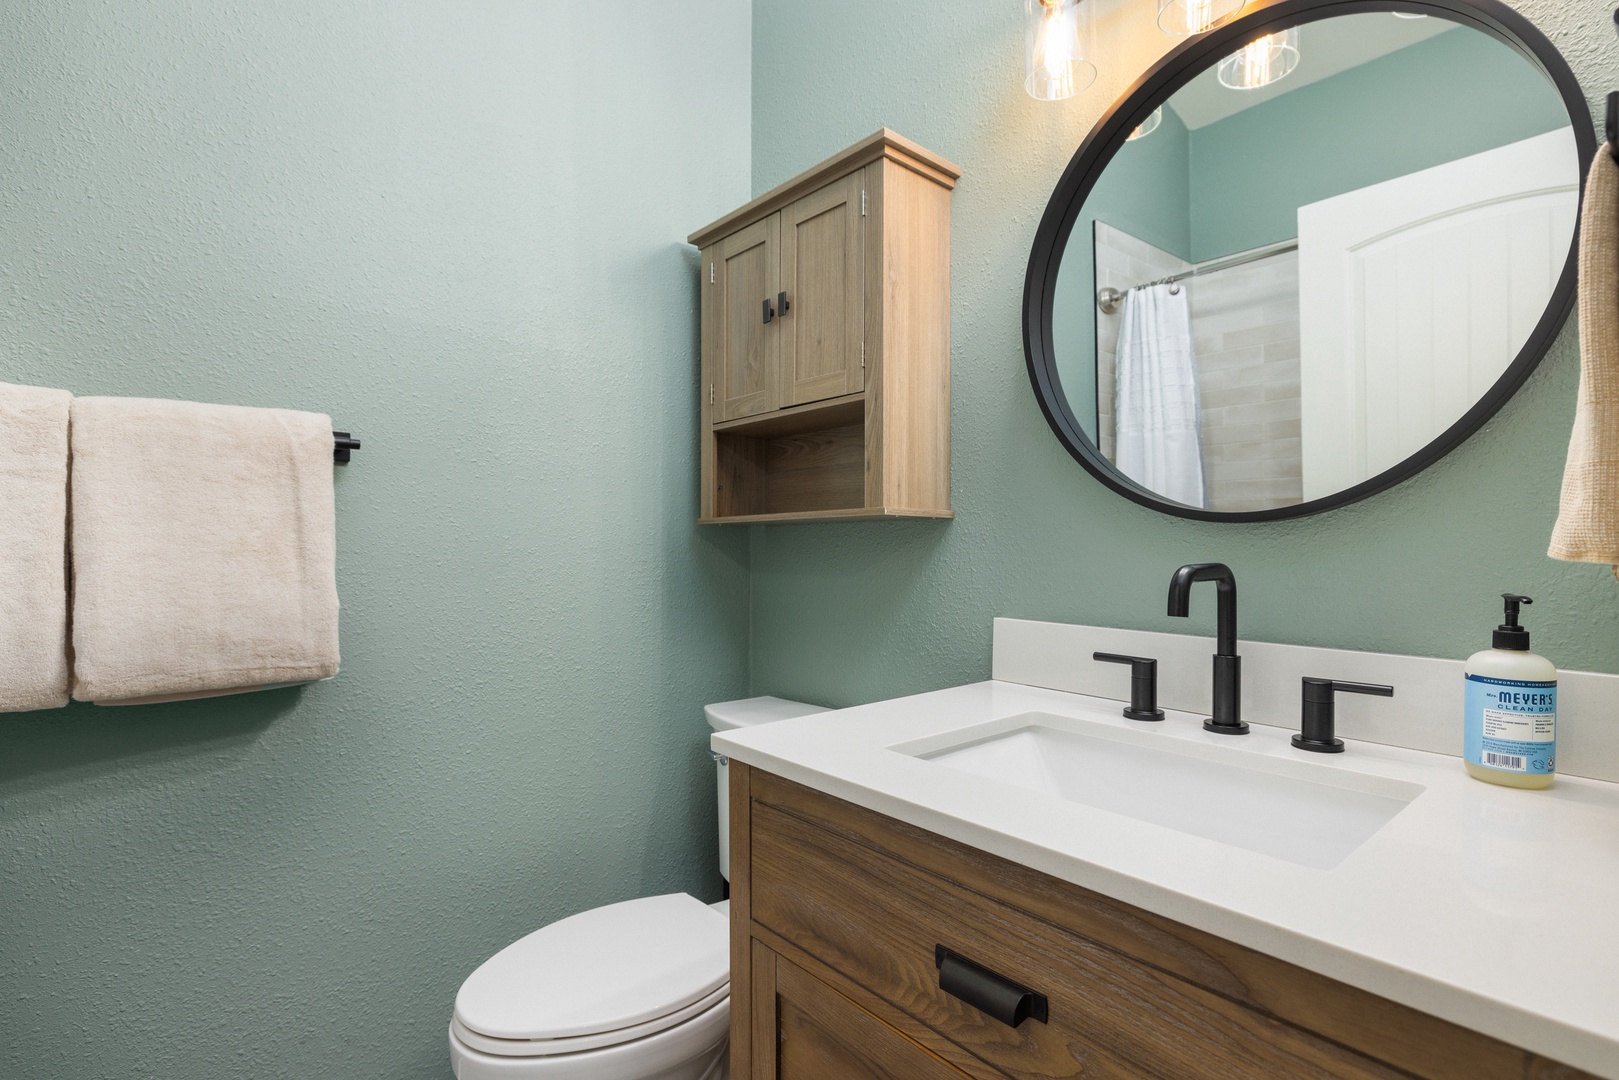 The full bathroom showcases a modern single vanity & shower/tub combo